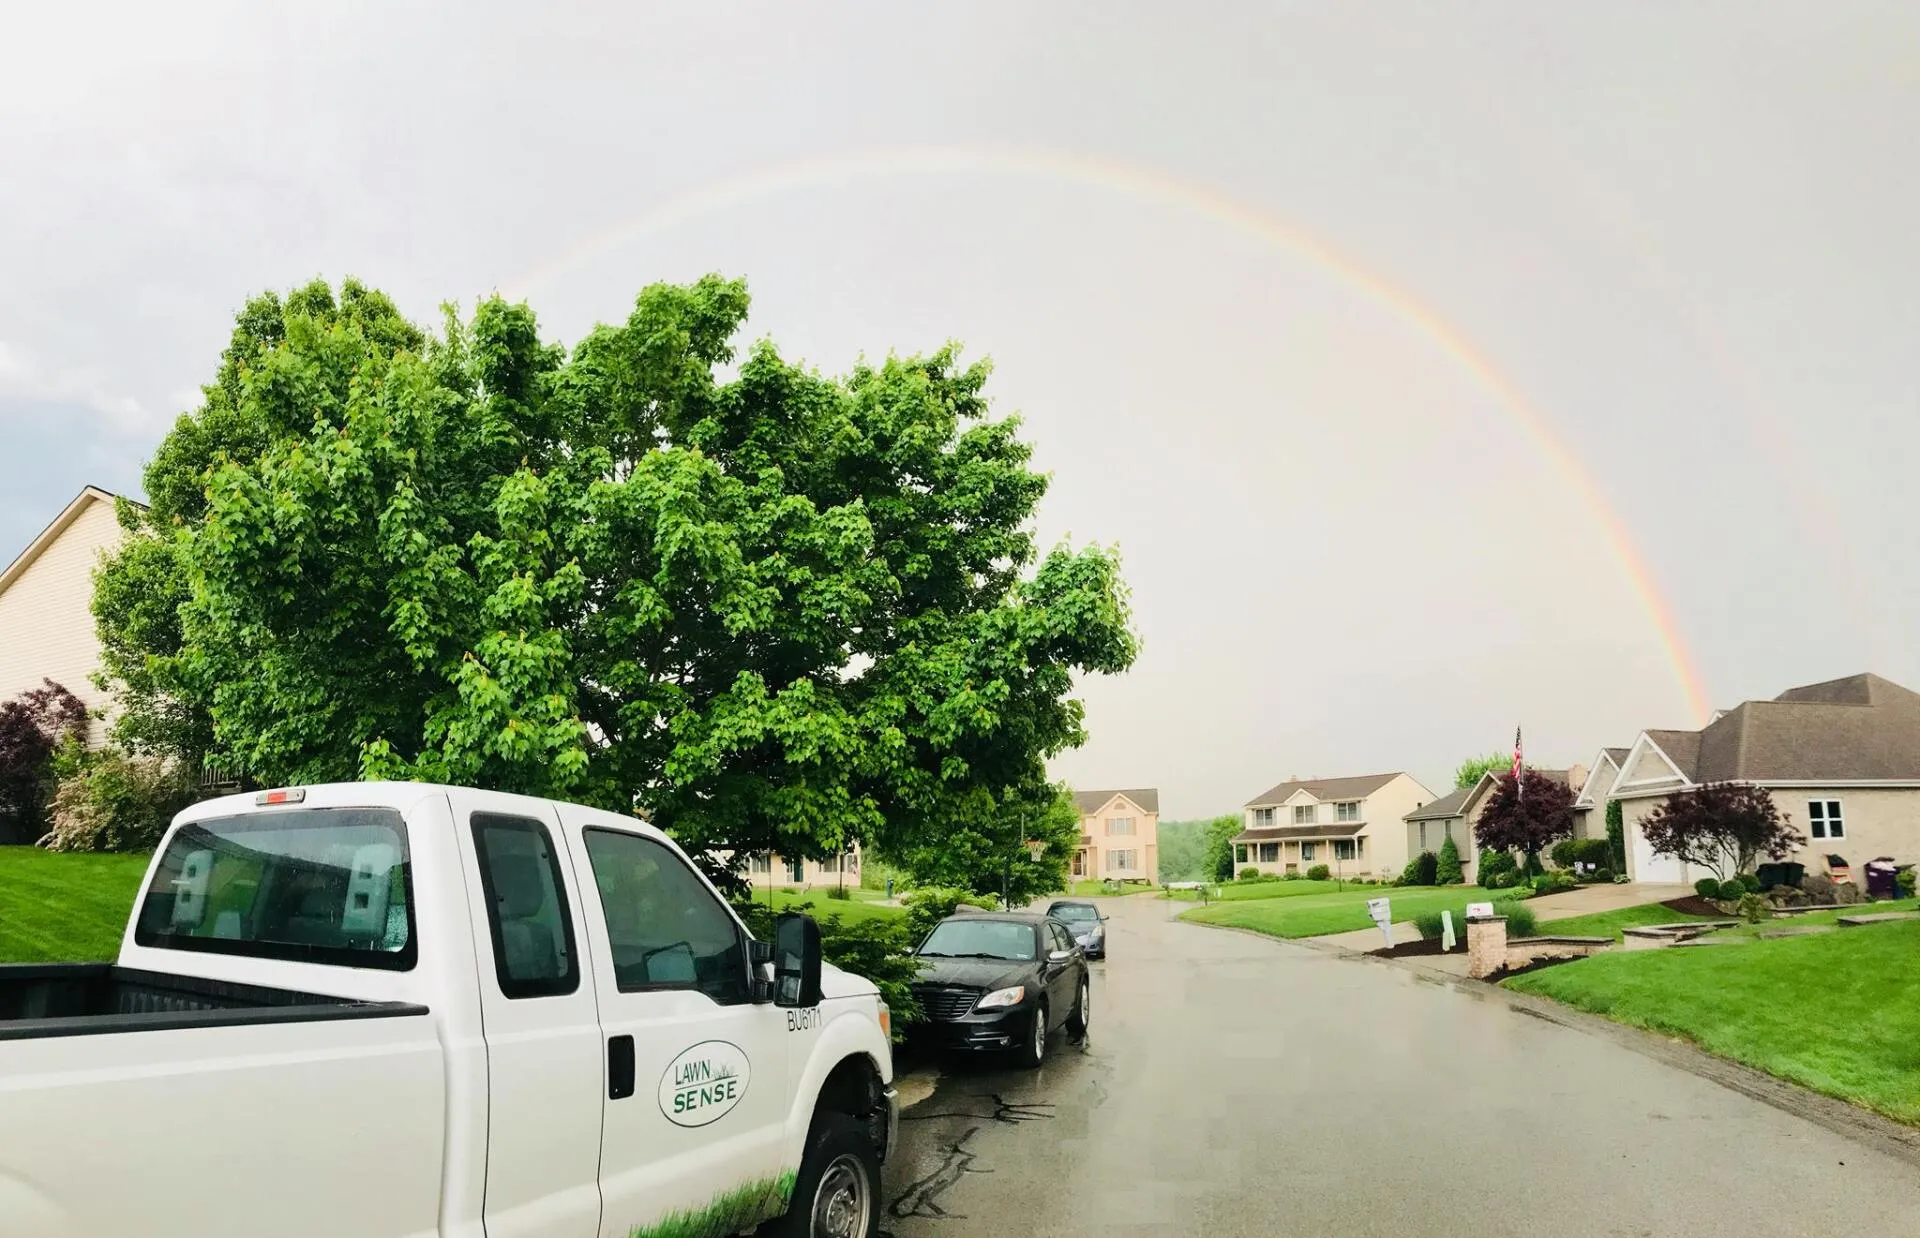 lawn sense truck and a rainbow